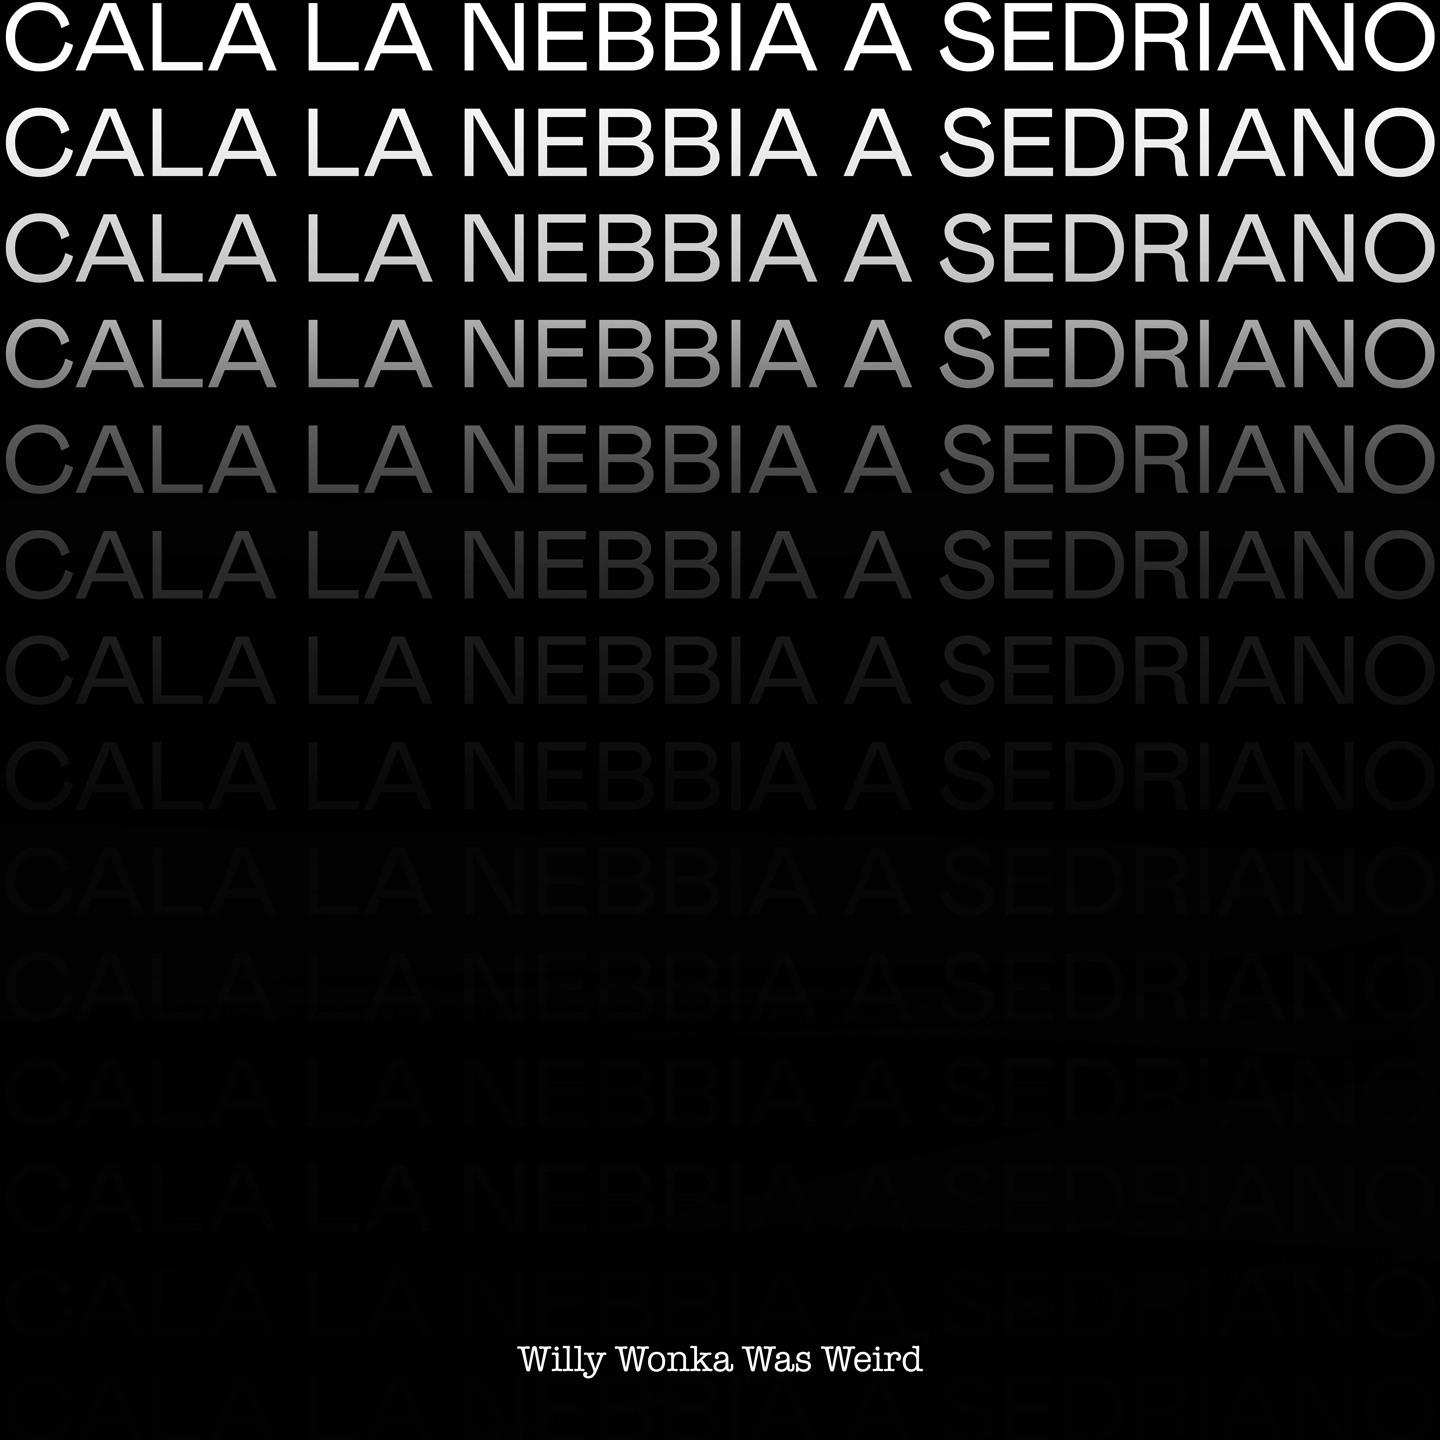 “Cala la nebbia a Sedriano” il nuovo singolo di Willy Wonka Was Weird